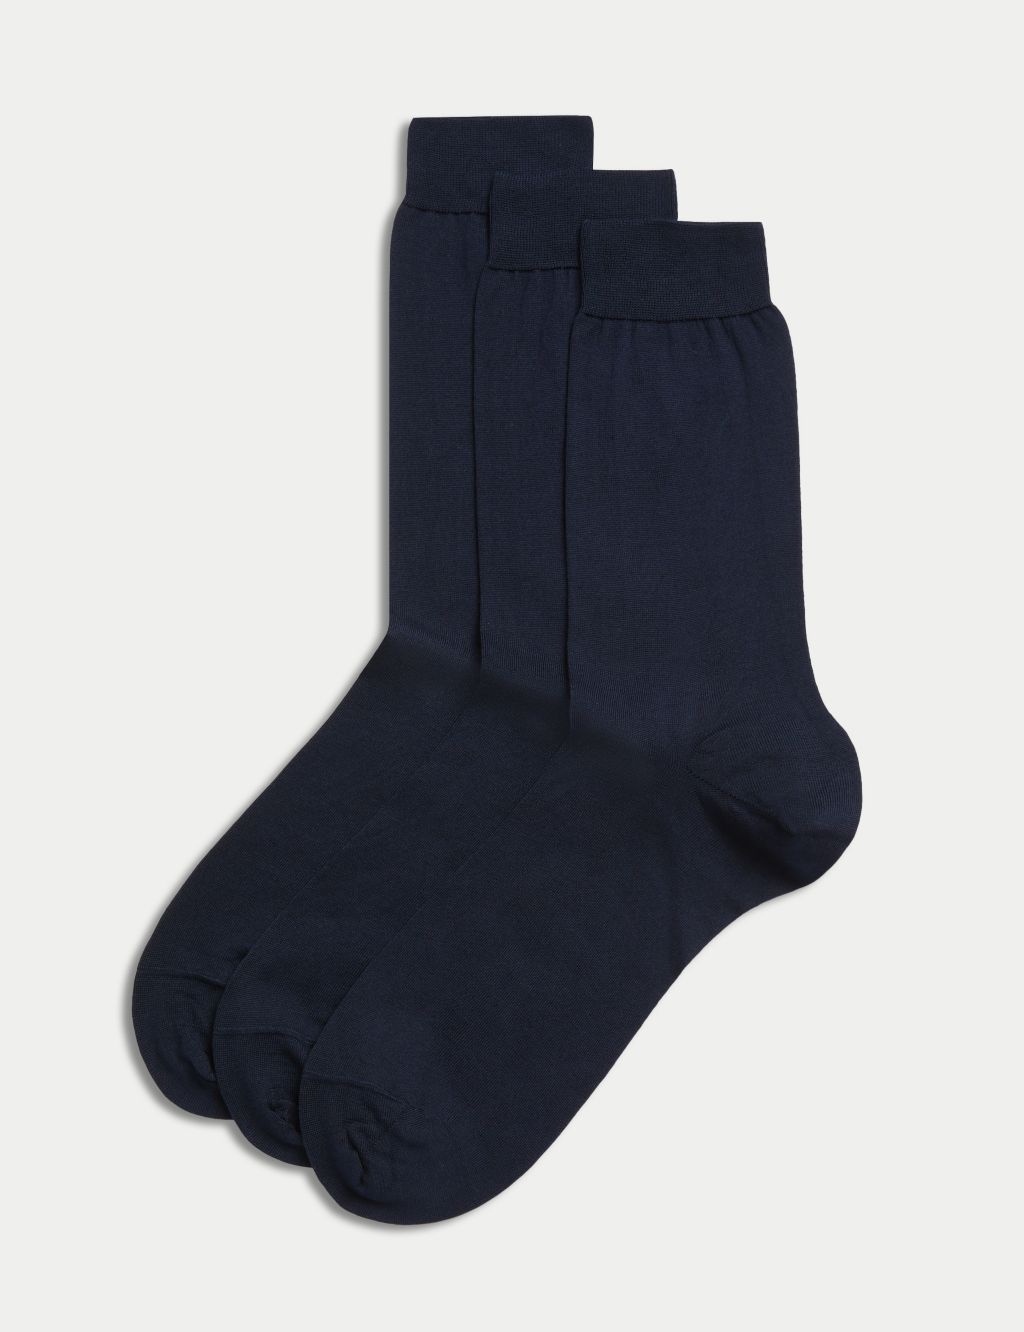 Shop Page 2 - Men's Socks | Socks for Men | M&S